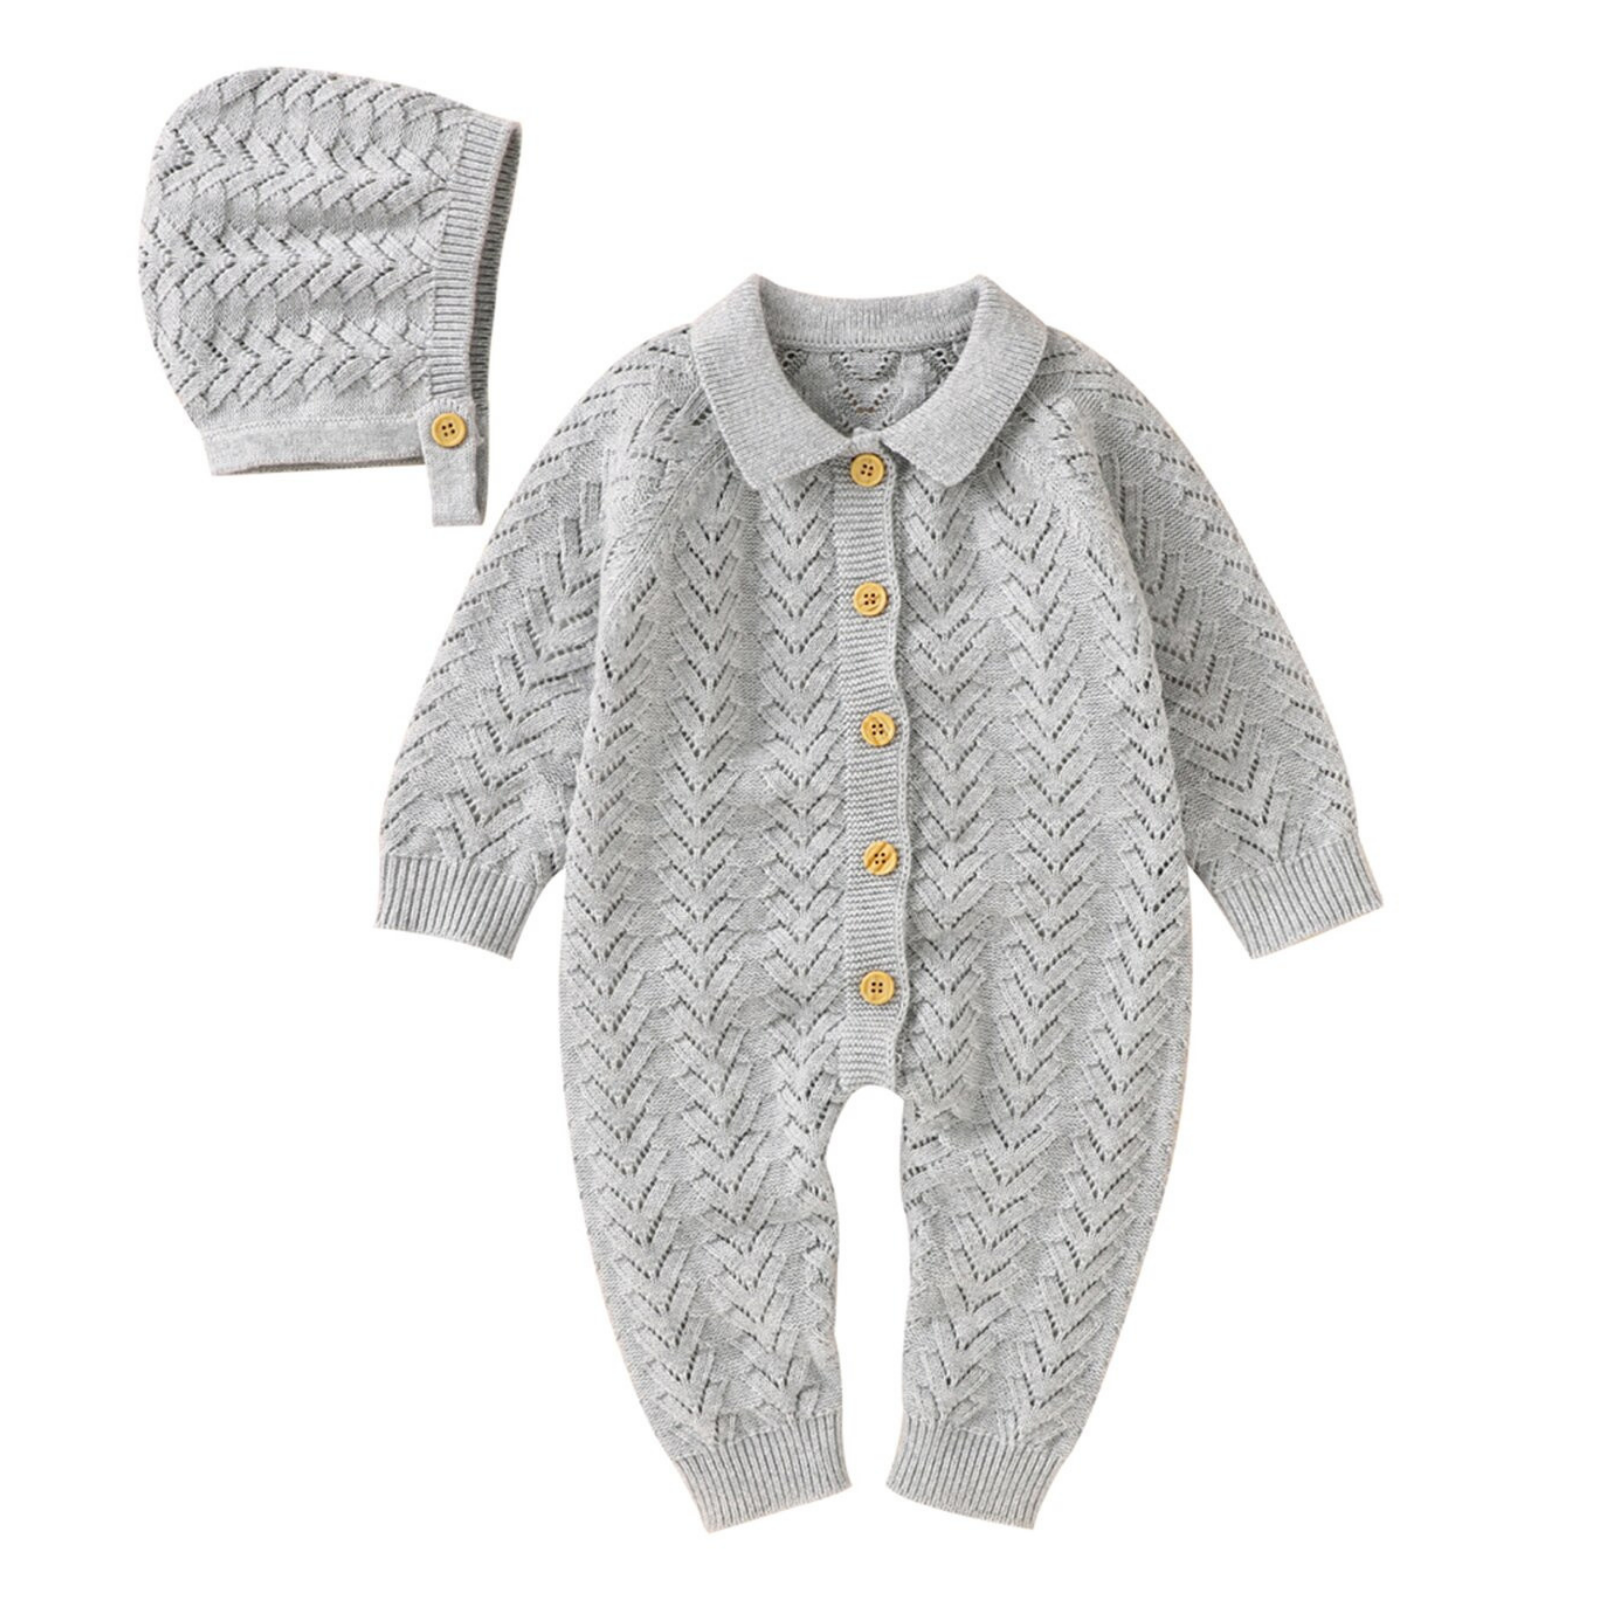 Knit Weave Baby Jumpsuit Clothing Set